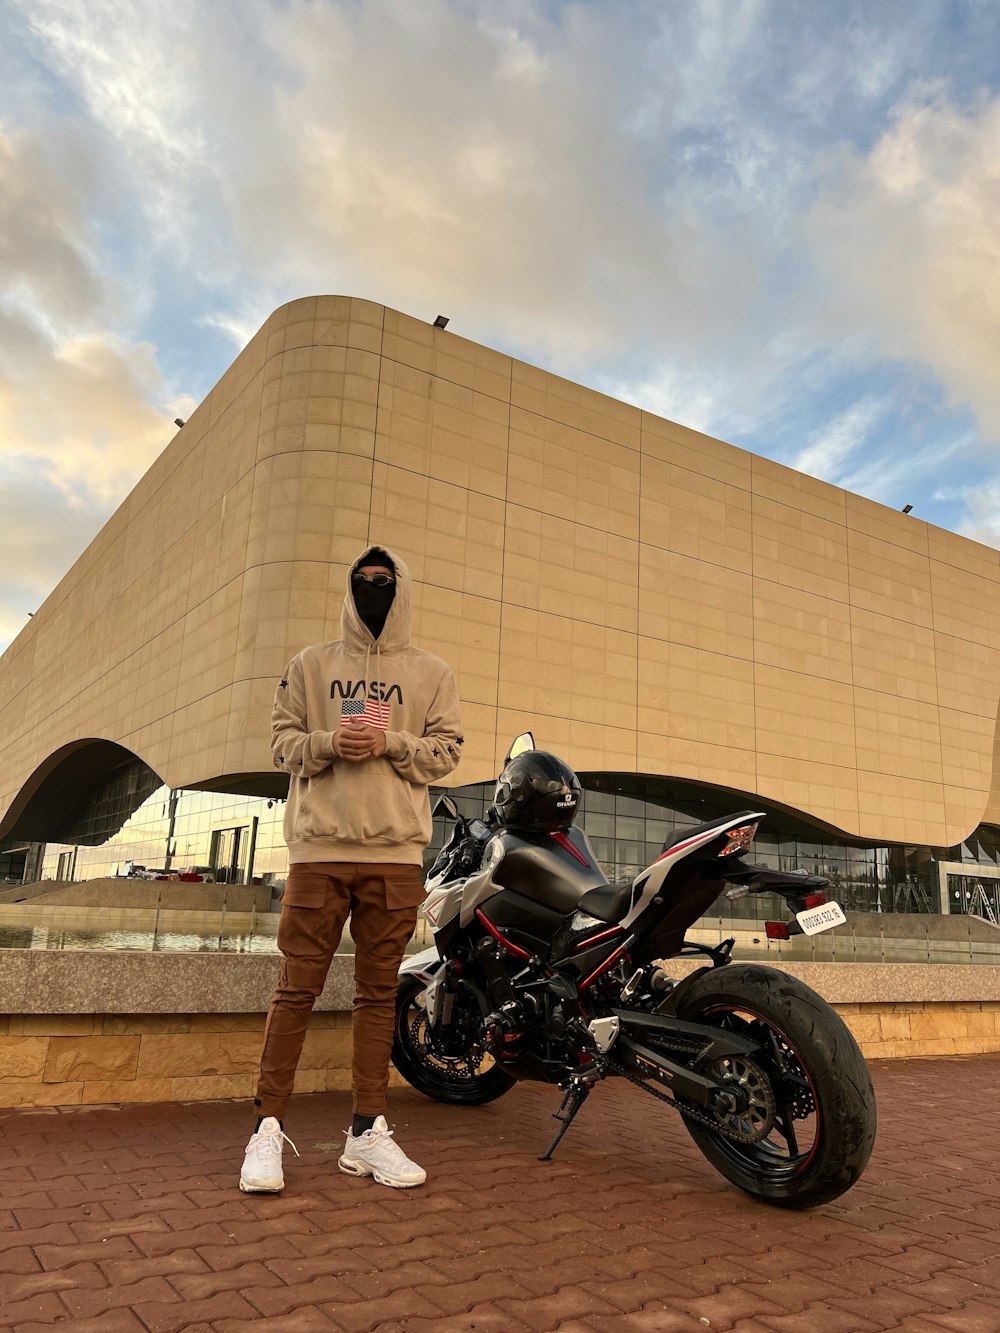 Un hombre parado junto a una motocicleta frente a un edificio